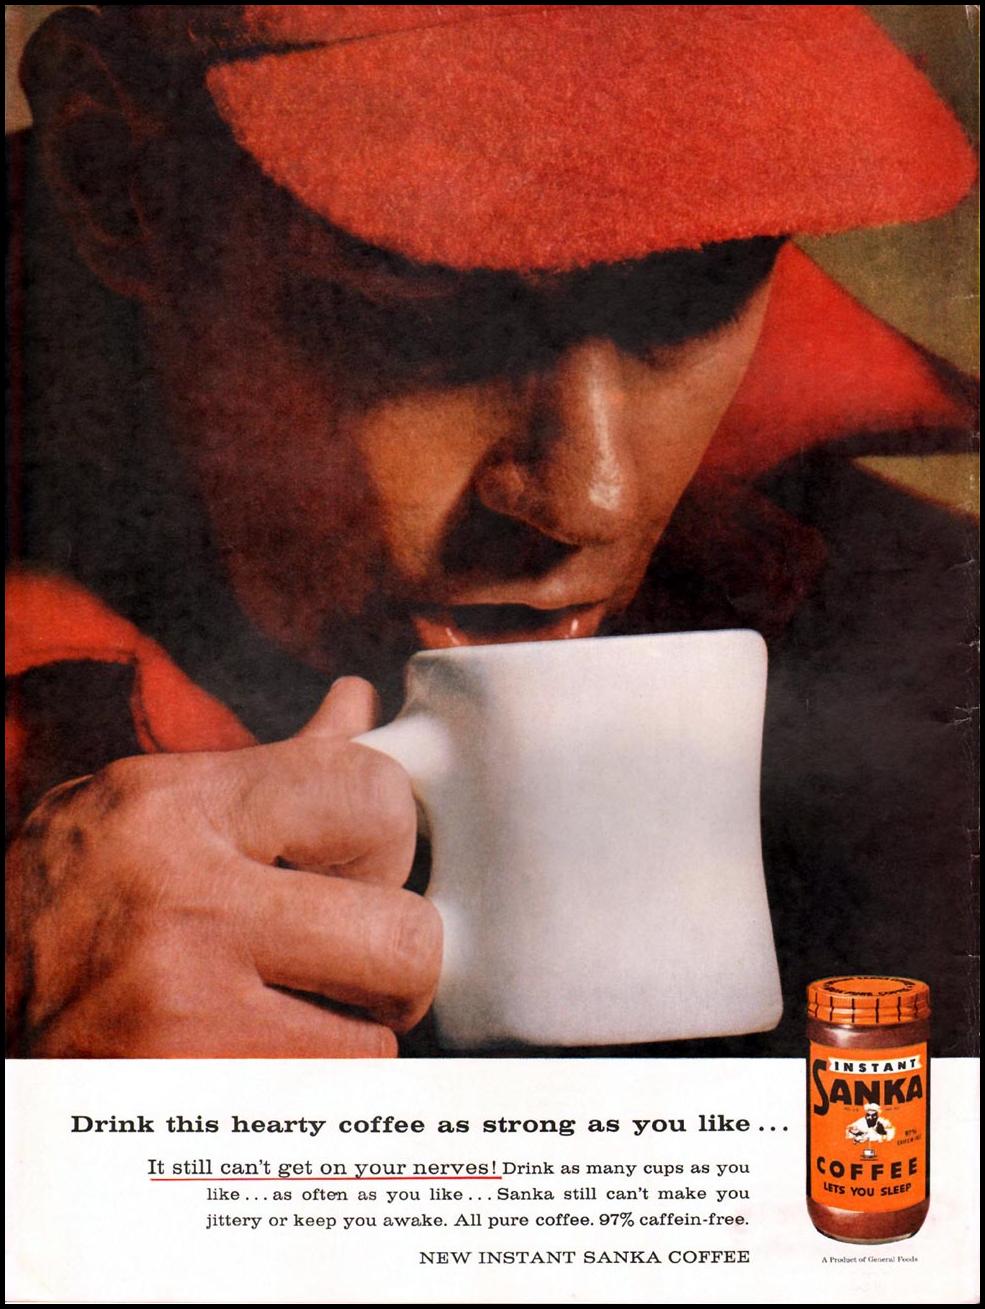 SANKA COFFEE
LIFE
07/01/1957
INSIDE FRONT